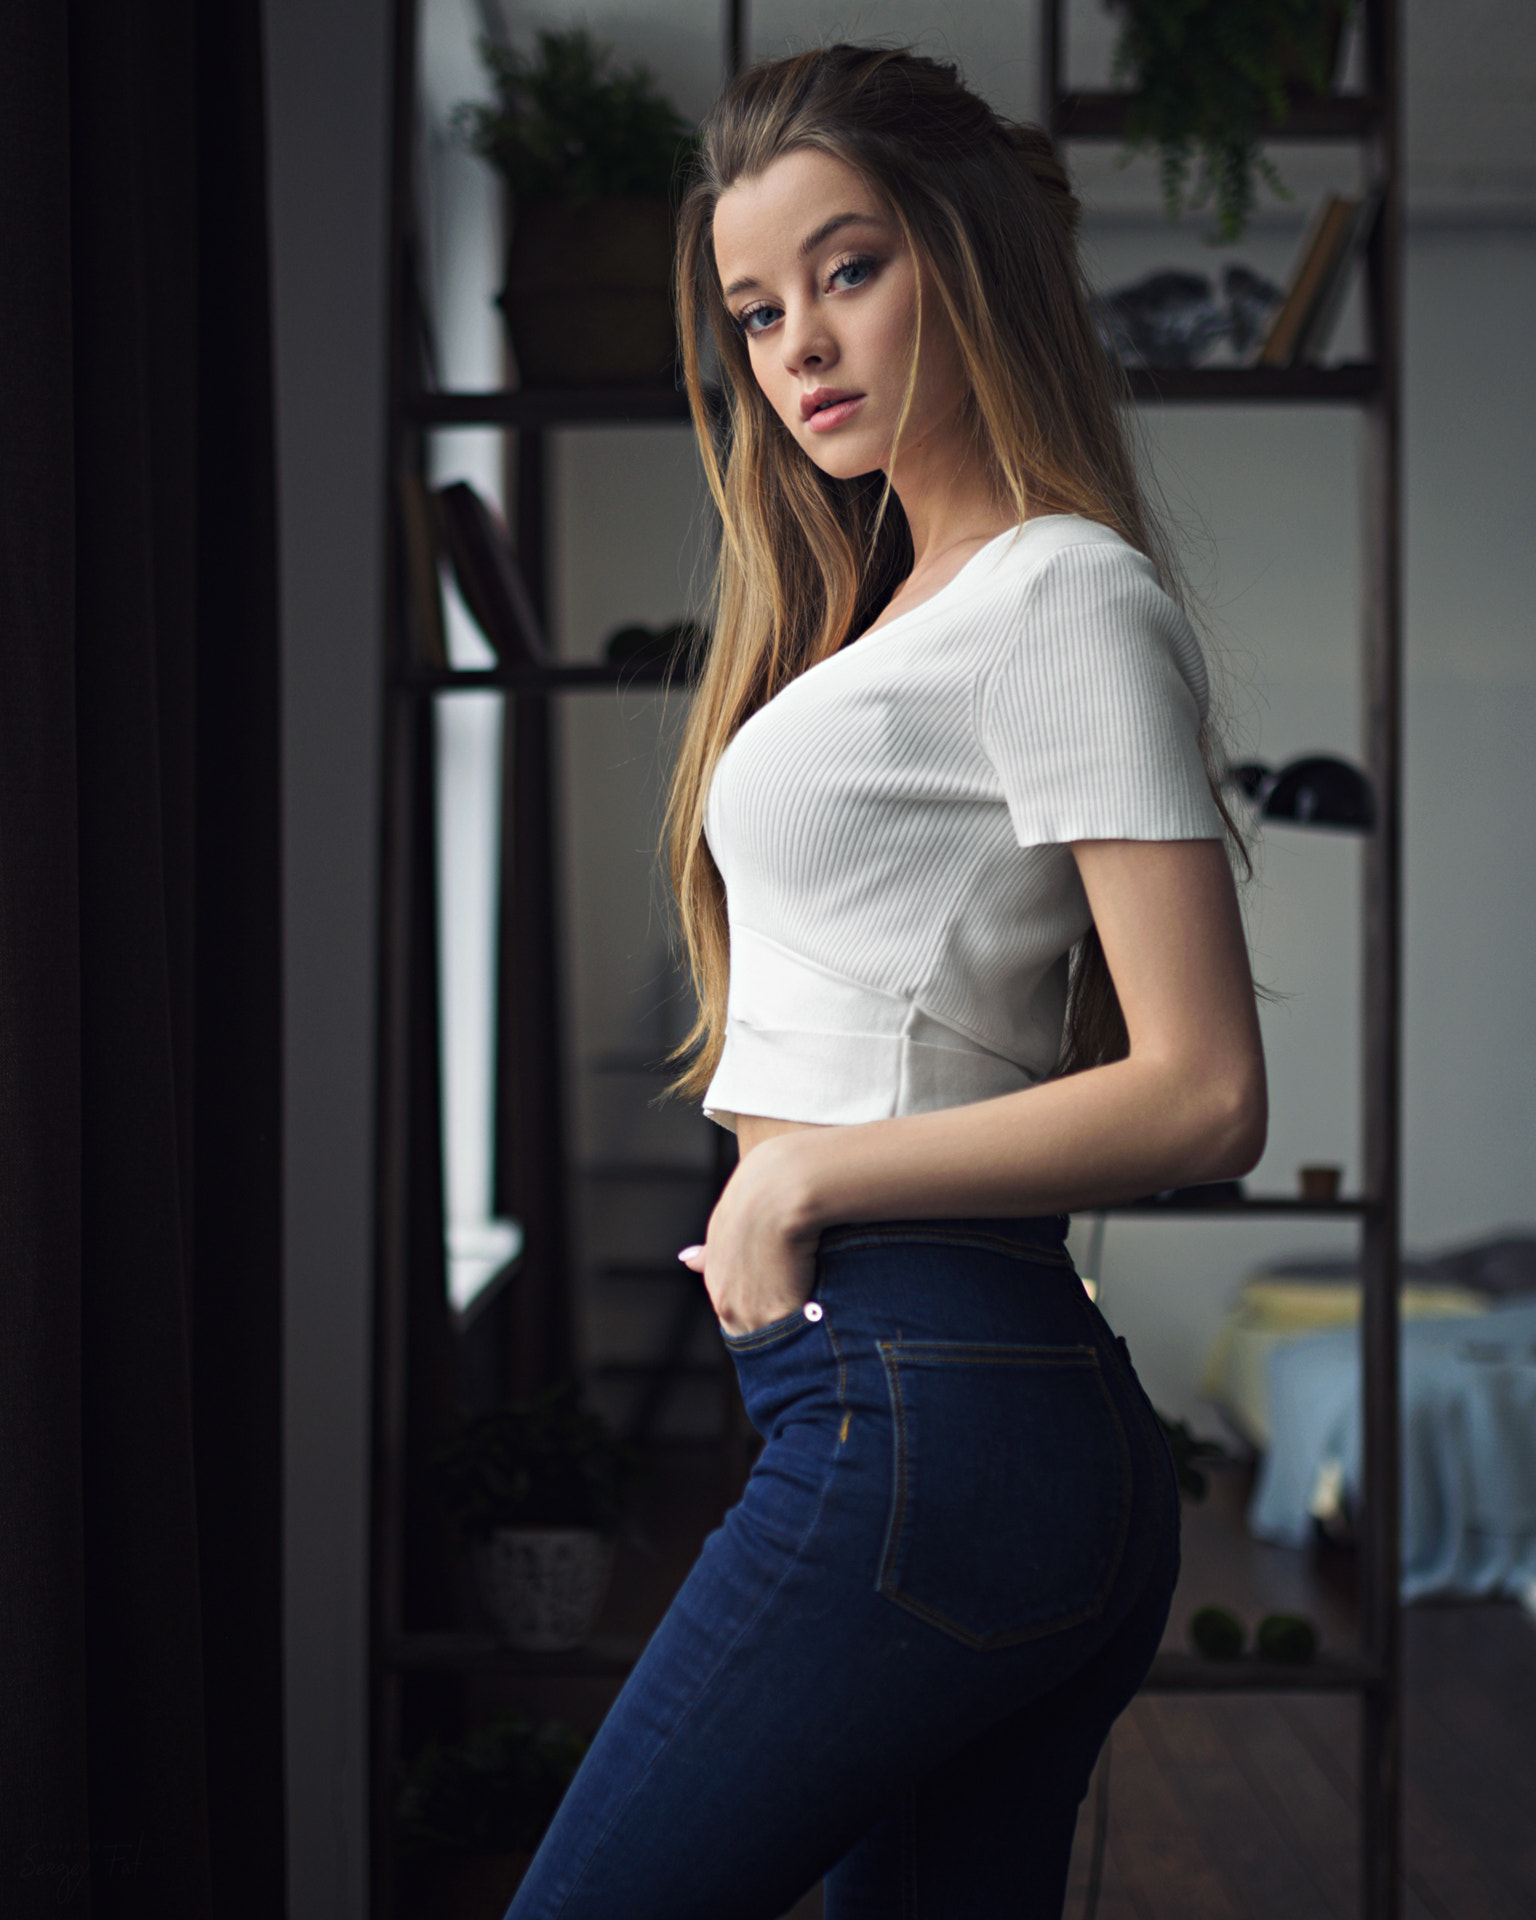 Sergey Zhirnov Women Blonde Long Hair Straight Hair T Shirt White Clothing Pants Jeans Denim Shelves 1536x1920